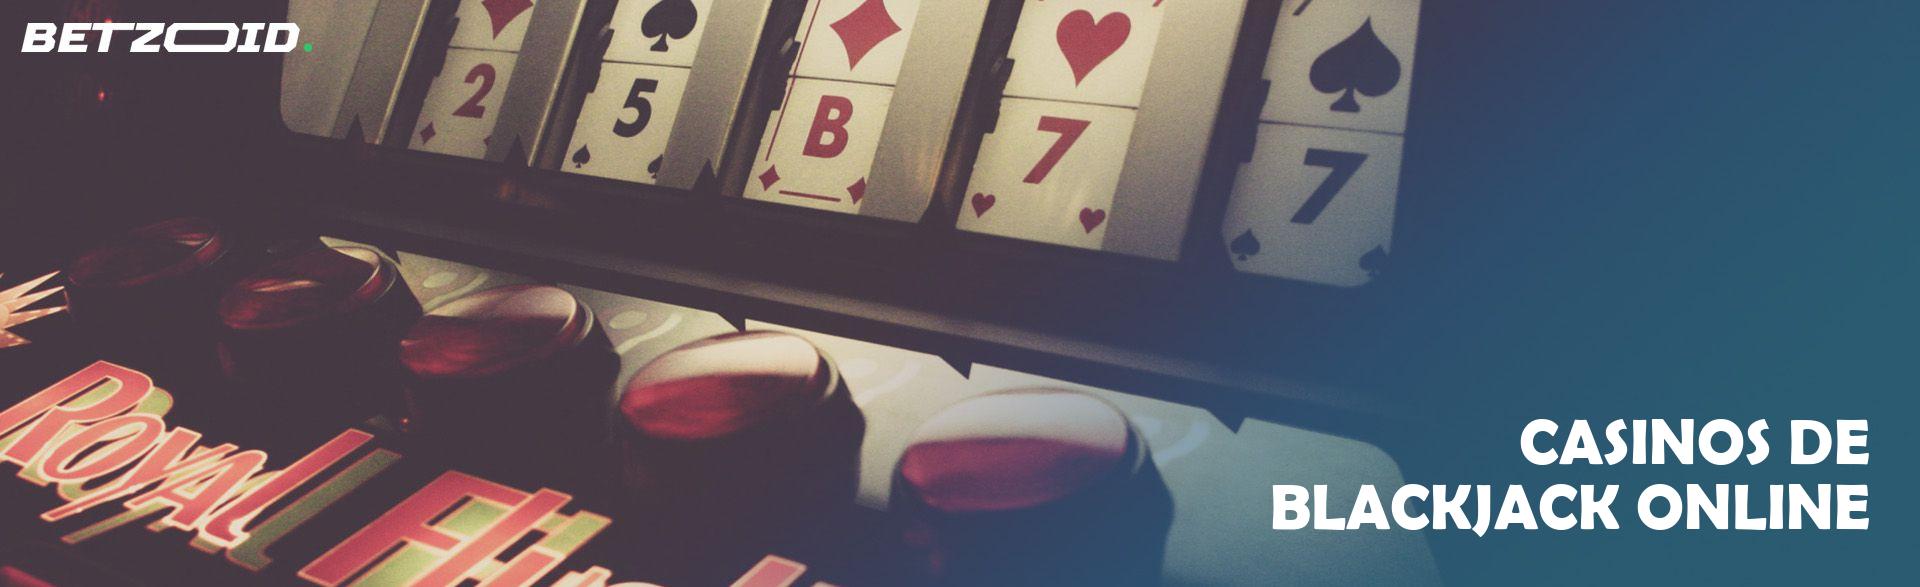 Casinos de Blackjack Online.